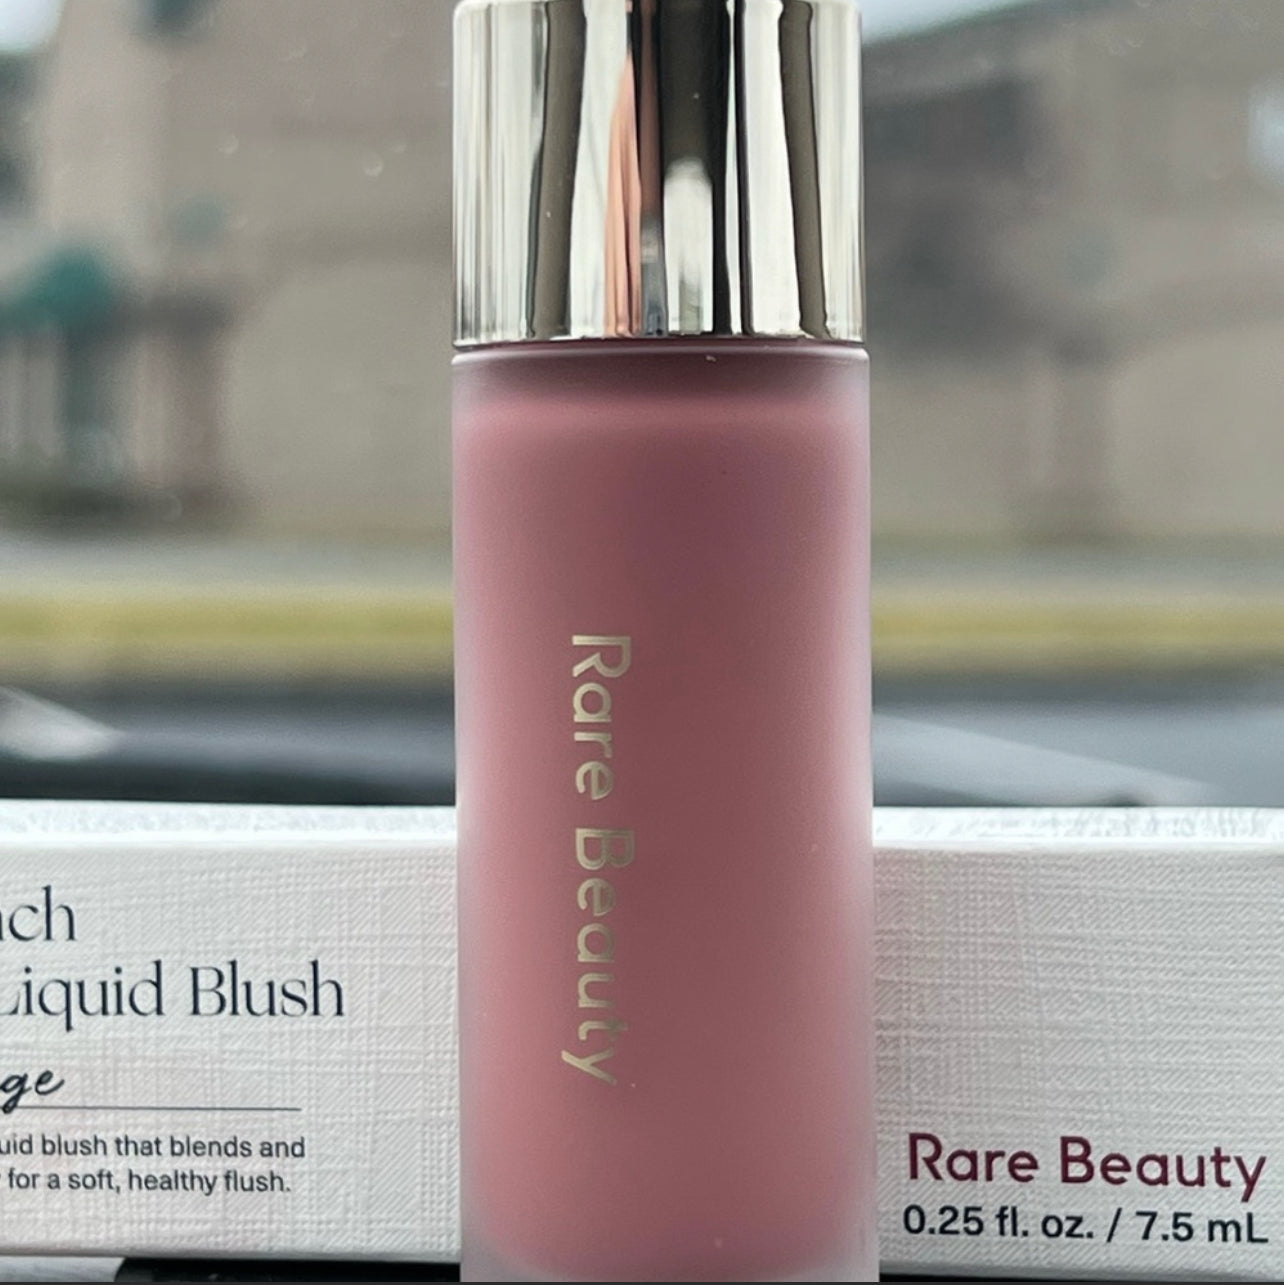 Rare Beauty Encourage Soft Pinch Liquid Blush